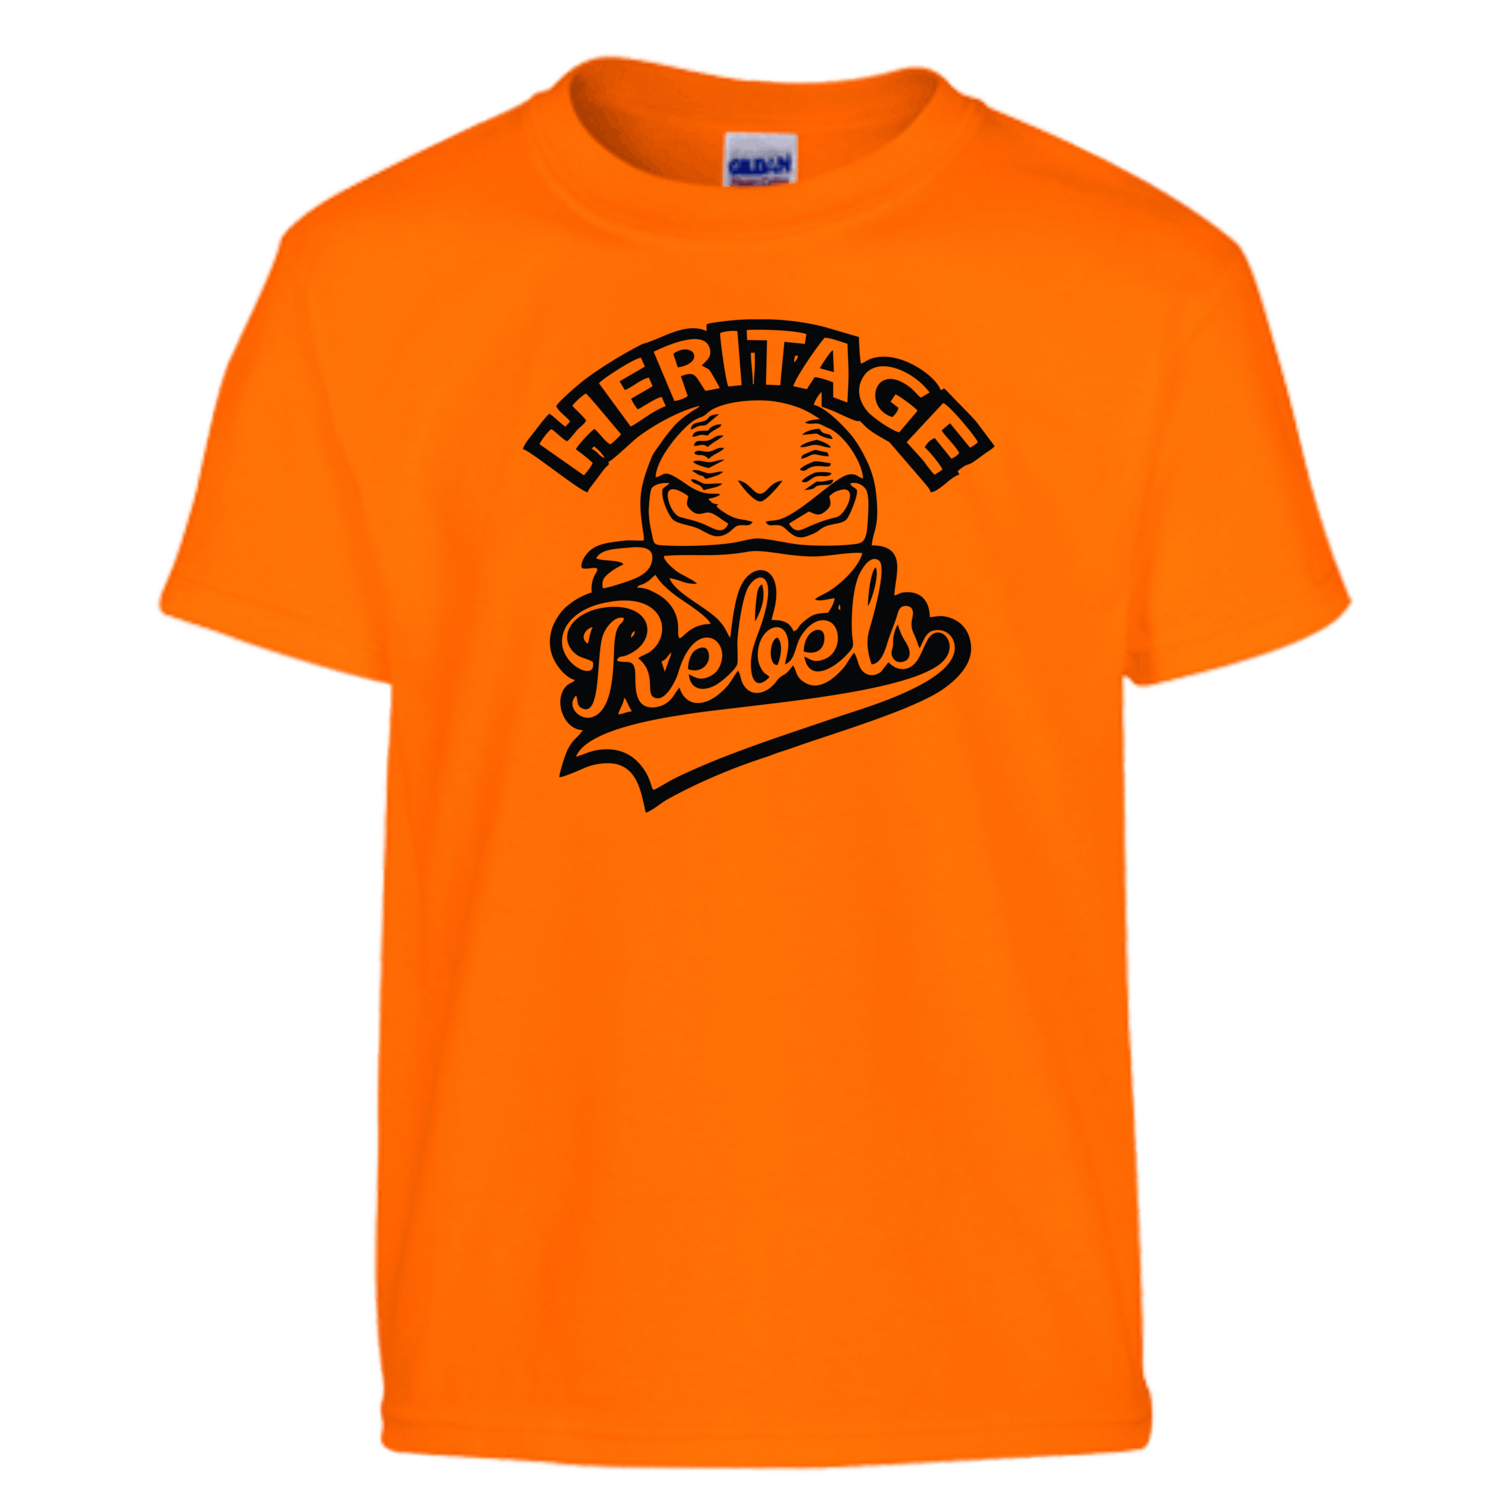 Orange Short-Sleeved Cotton T-shirt - Adult & Youth